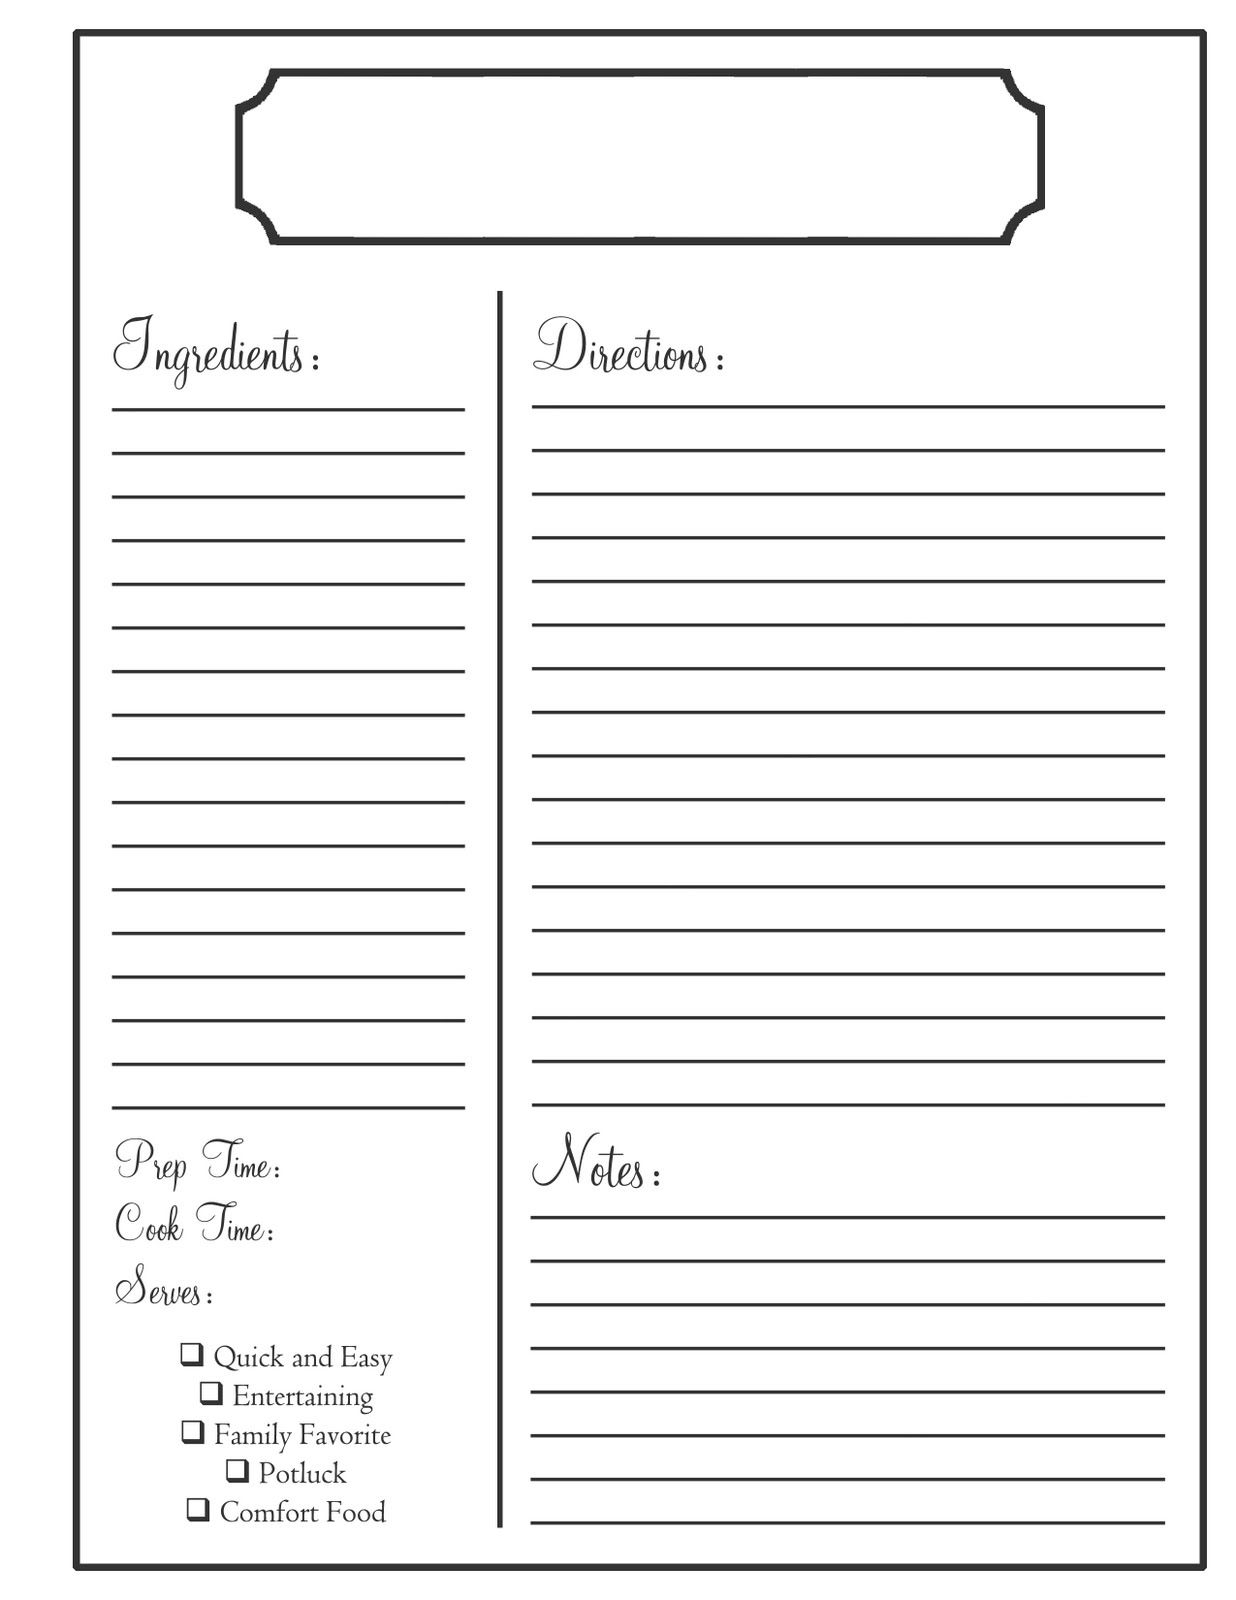 Joelle Charming Ojai And Santa Barbara Wedding Planner Recipe Book 